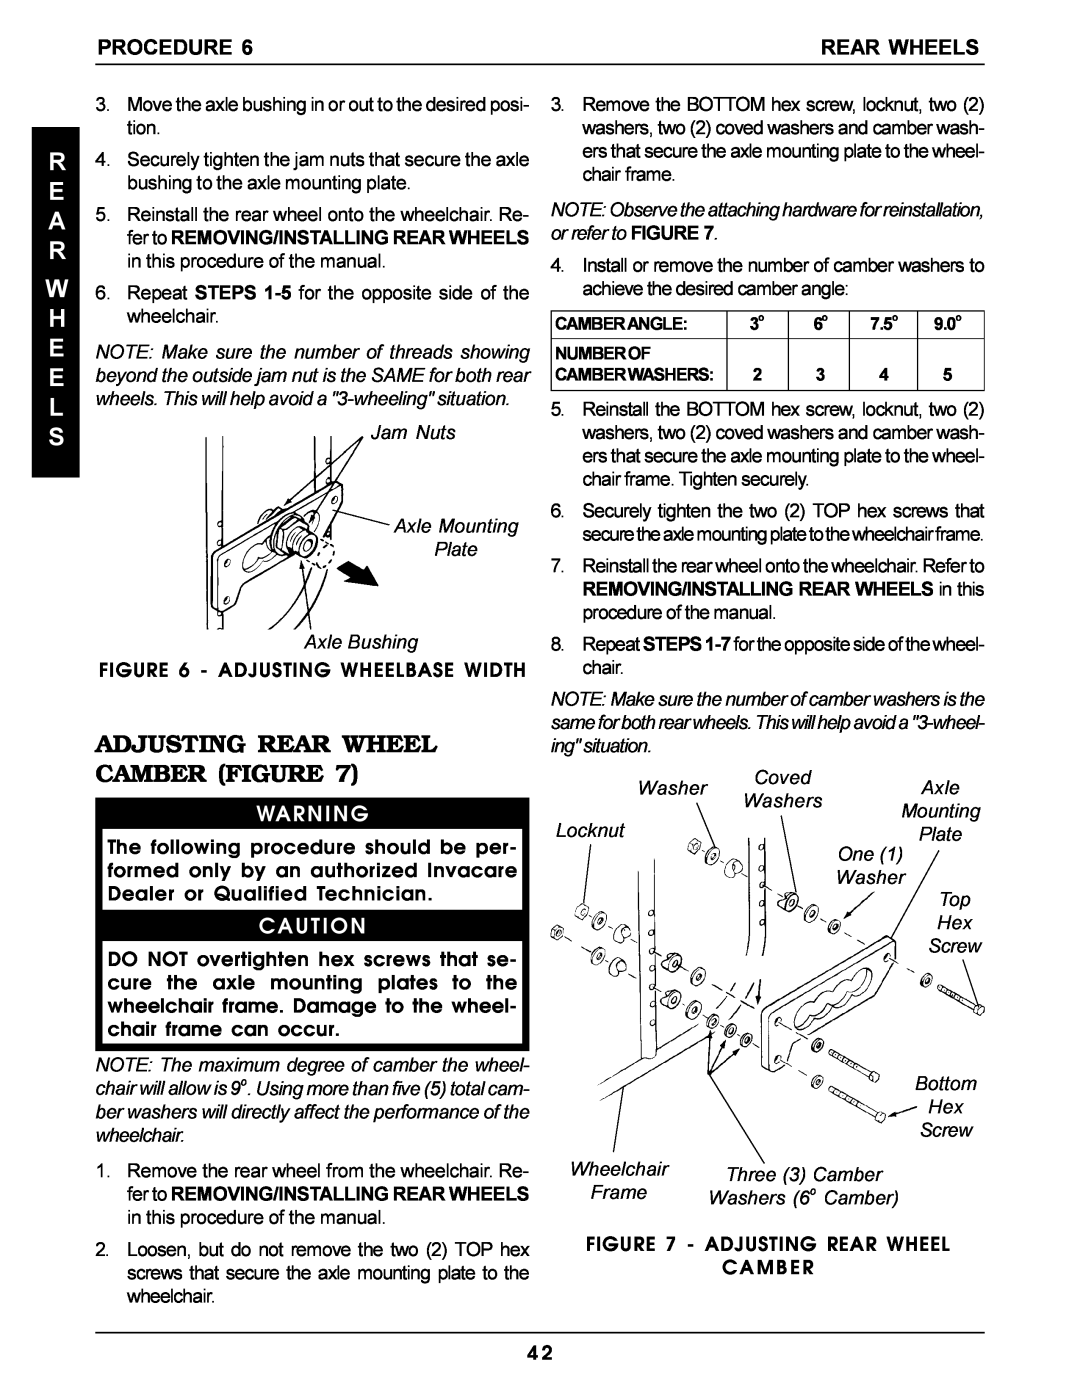 Invacare Pro Series Adjusting Rear Wheel Camber Figure, R E A R W H E E L S, Procedure, Rear Wheels, Camberangle, Numberof 